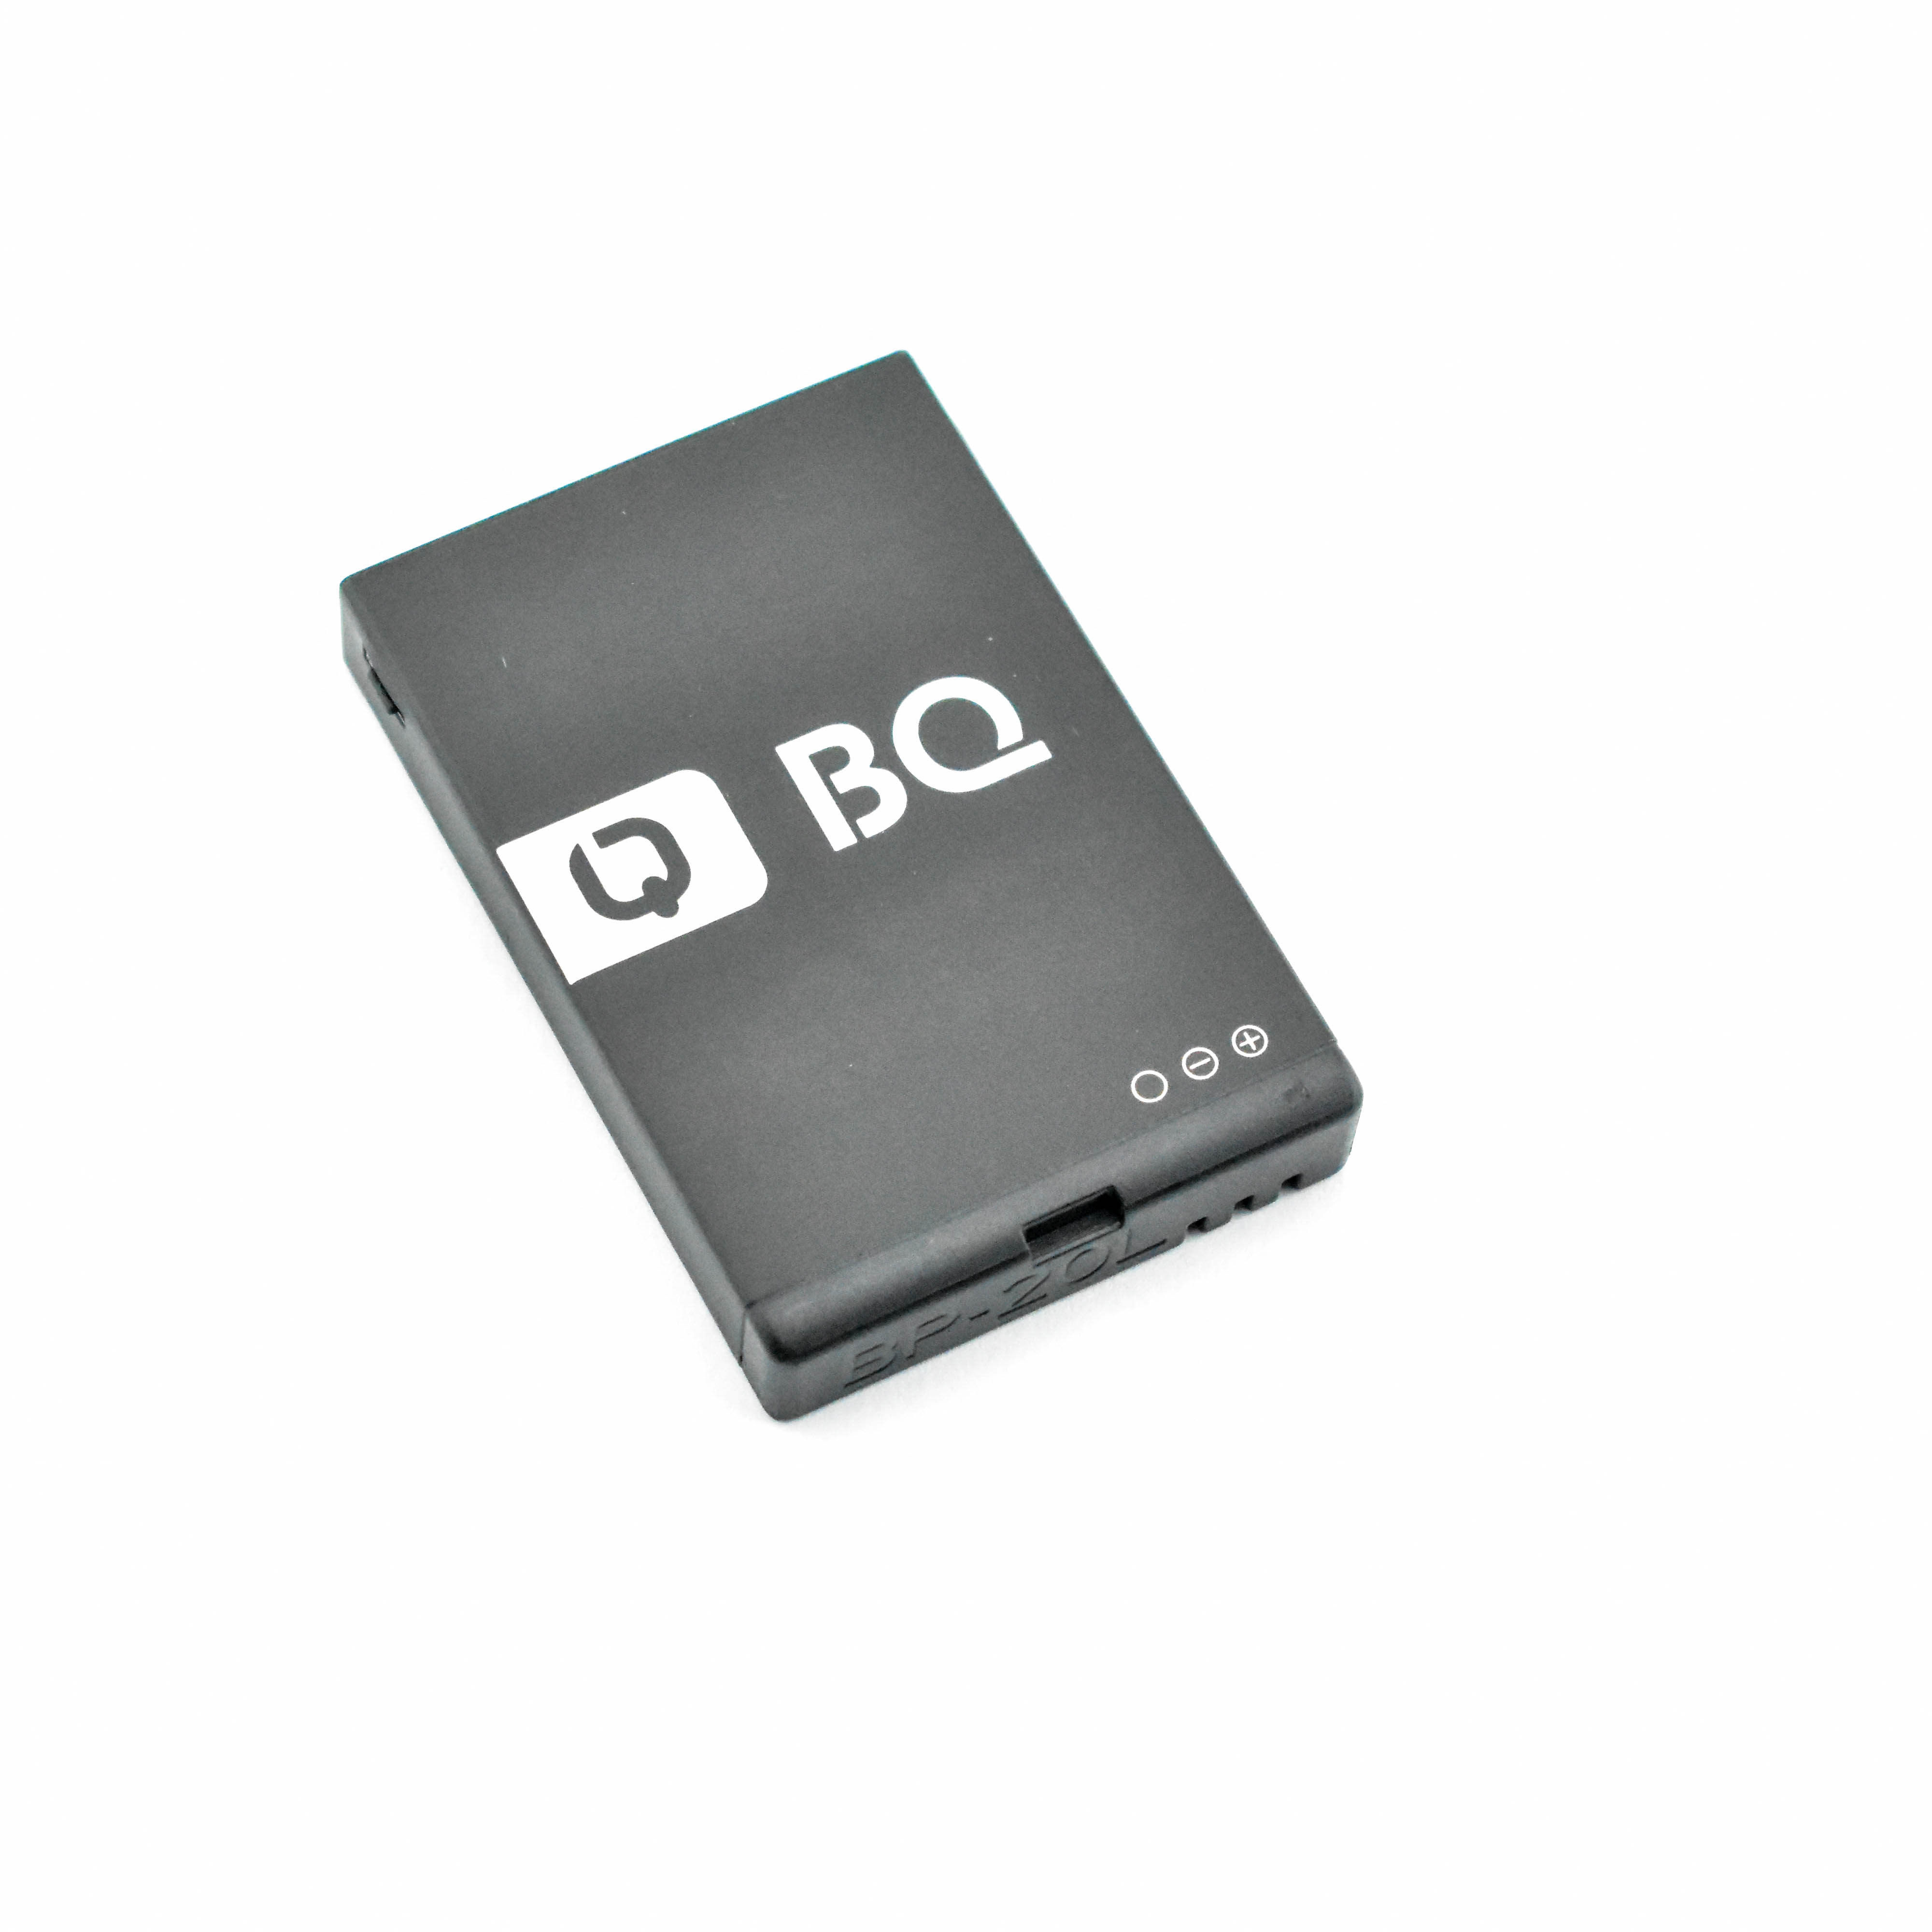 Аккумуляторы для телефона спб. Аккумулятор для BQ-1807 Step+. BQ-2810 Boom XL аккумулятор. BQ 2810 аккумулятор. BQ 2805 Boom XL аккумулятор.